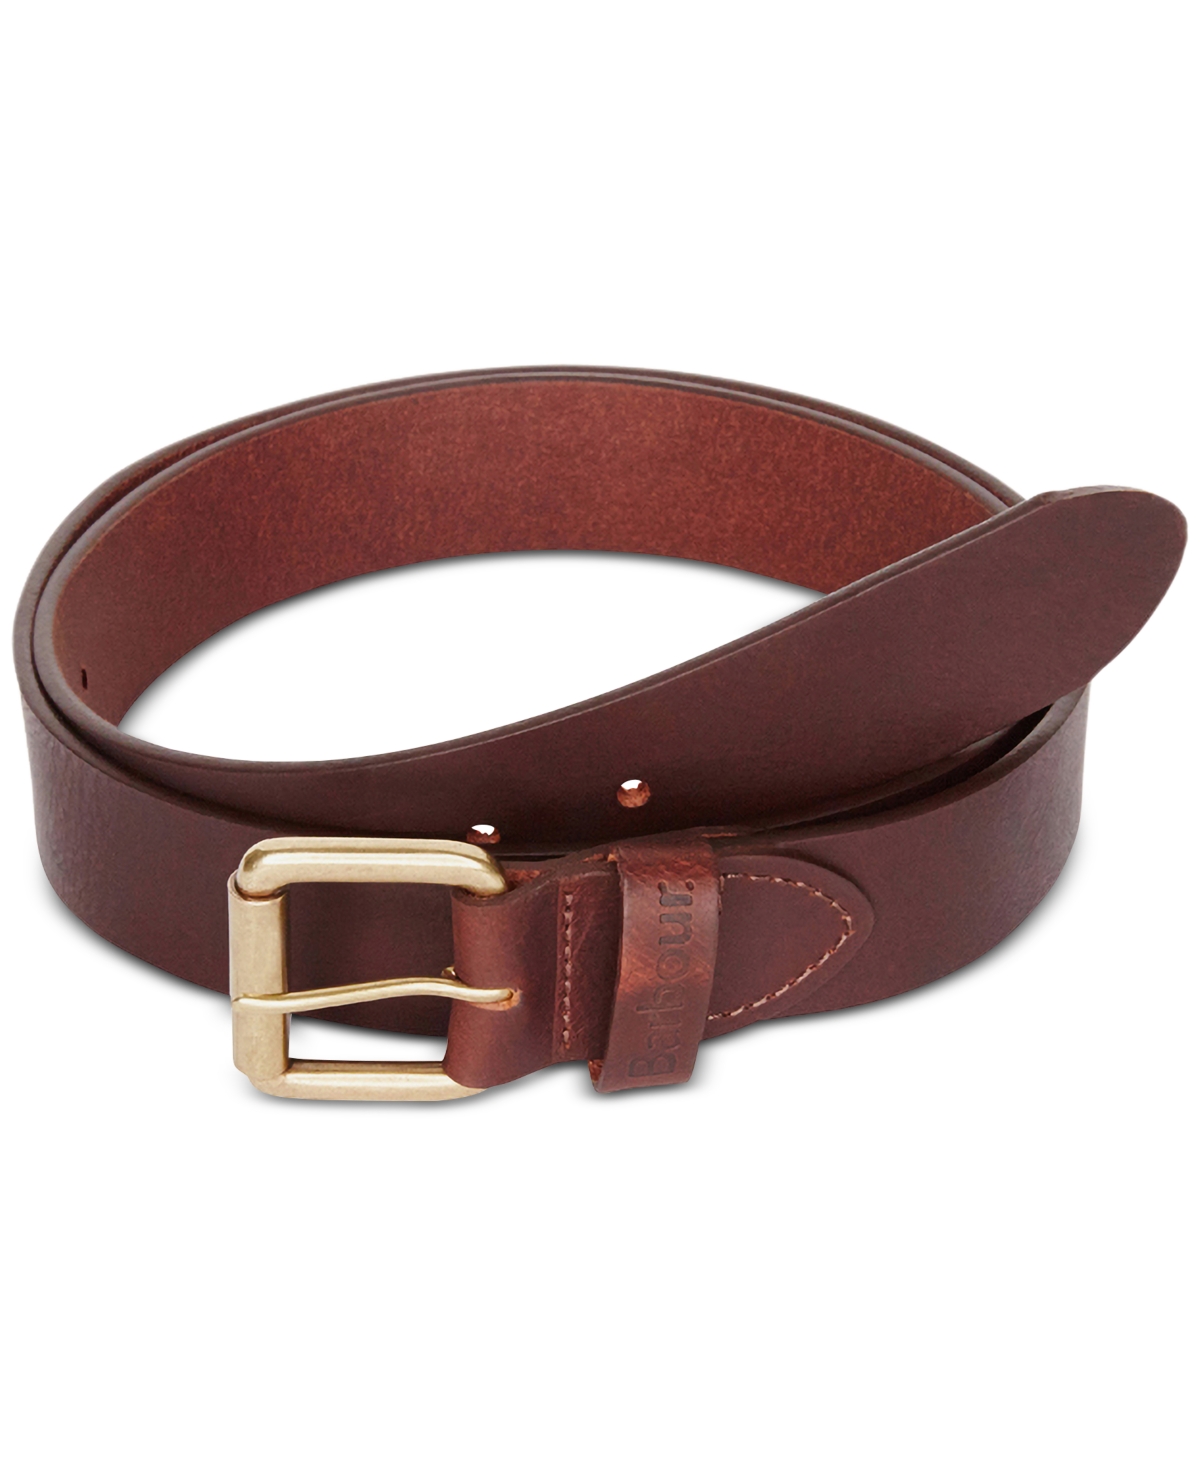 Men's Allanton Leather Belt - Brown